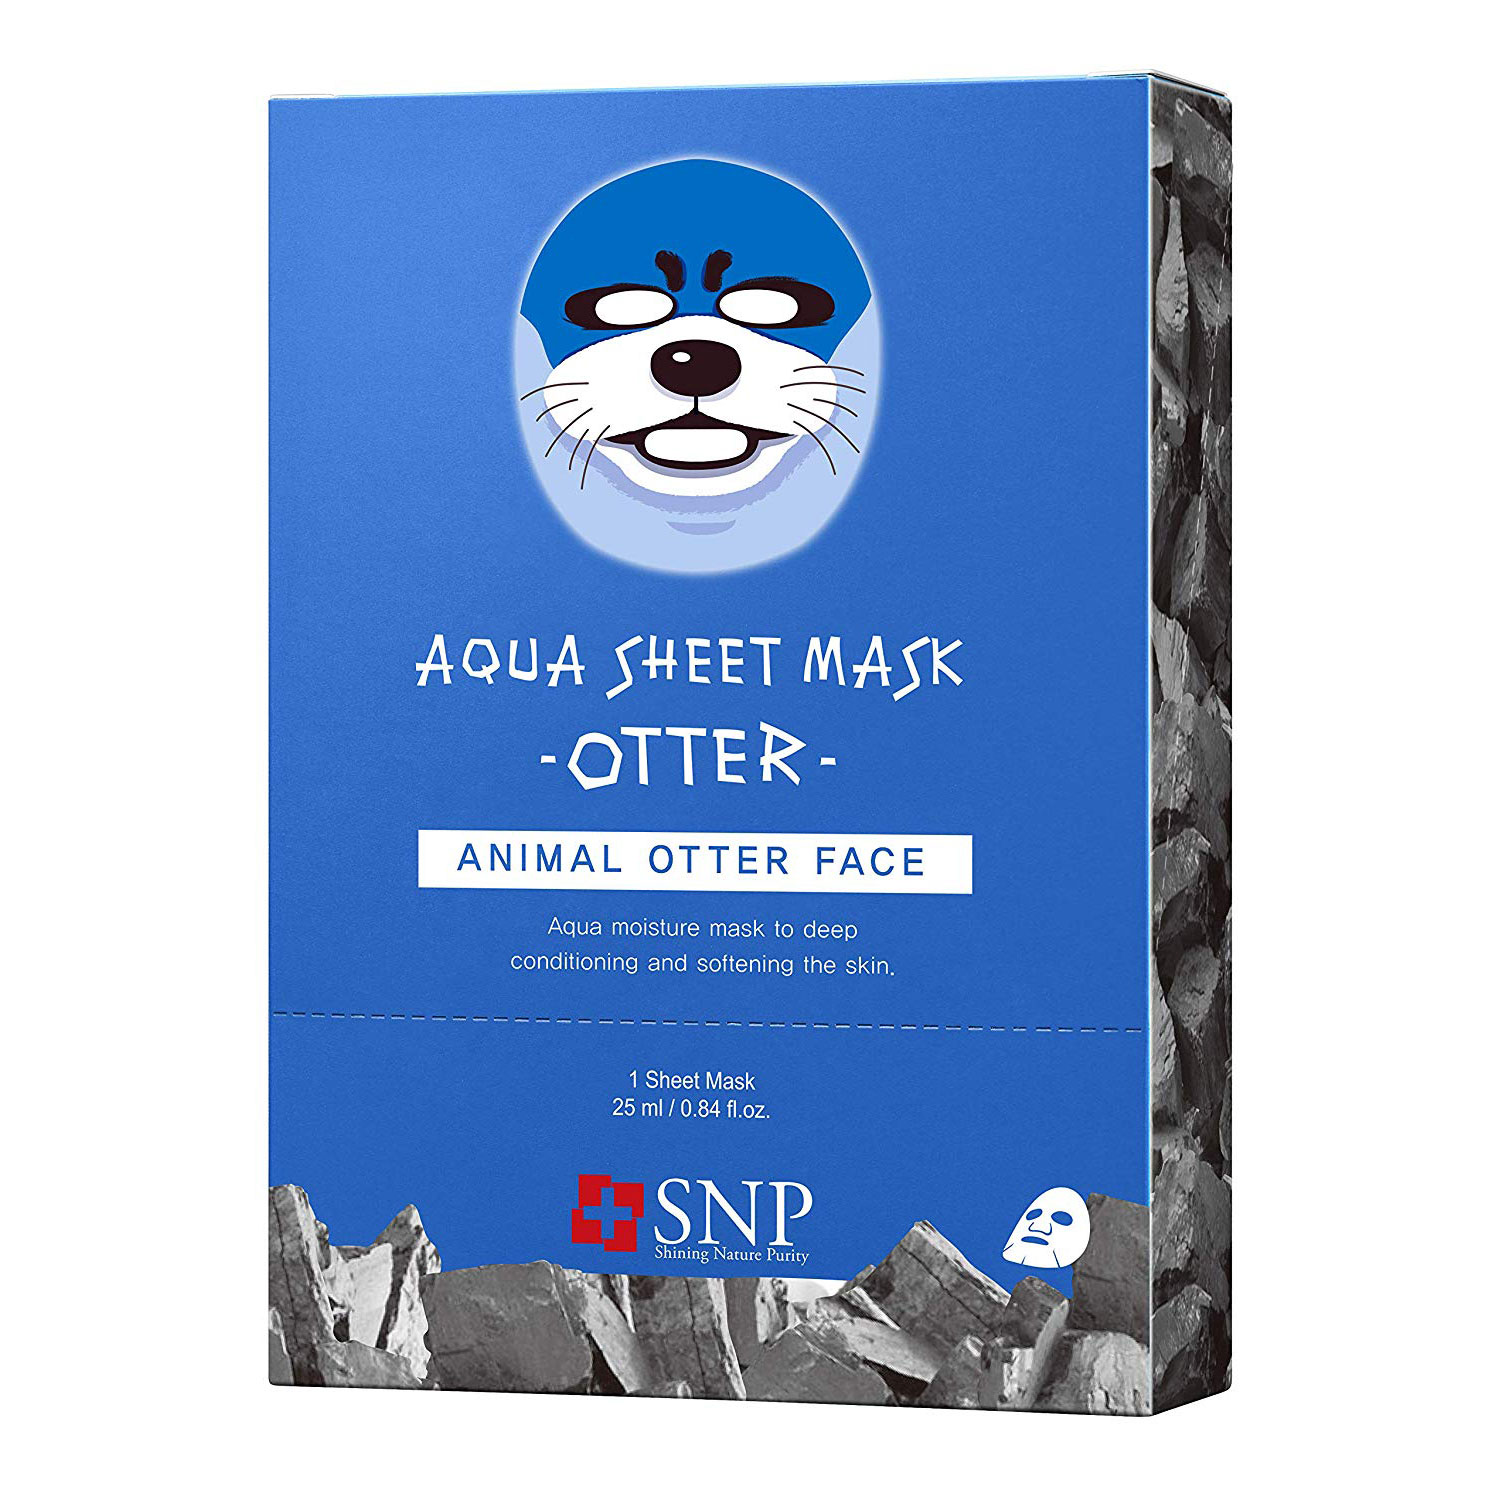 SNP Otter Aqua Mask (10piece)